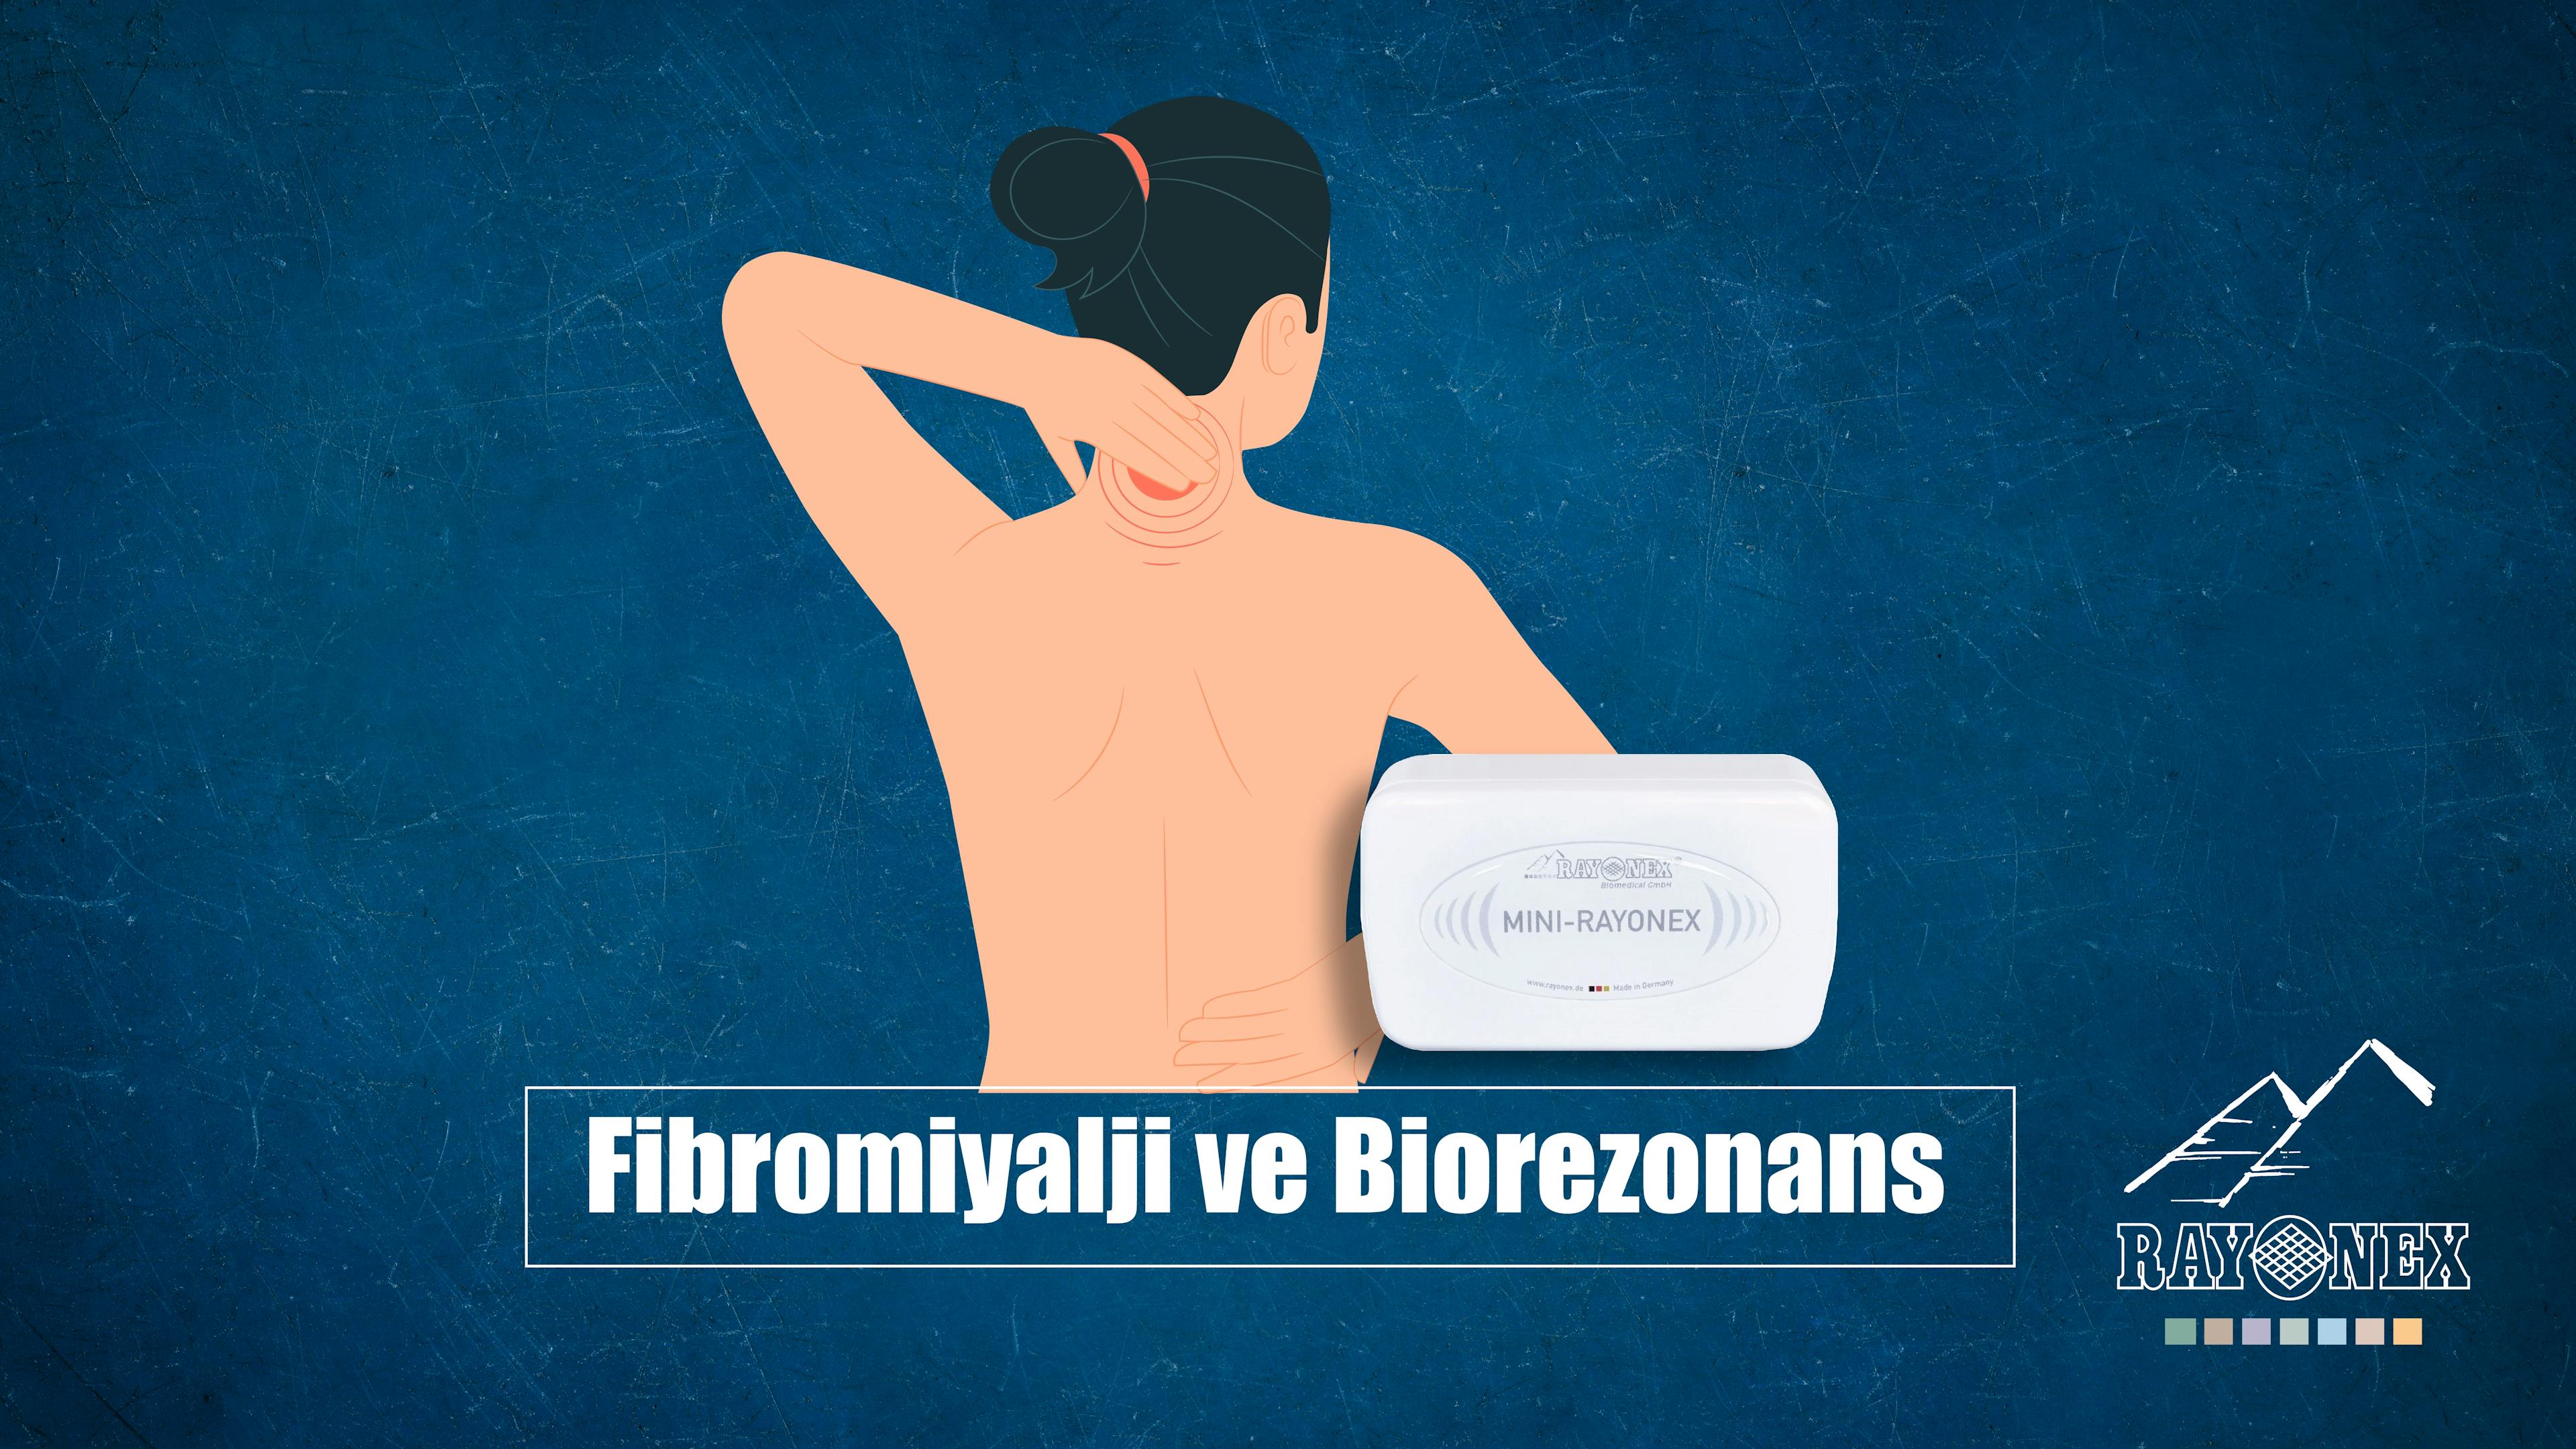  Fibromiyalji ve Biorezonans